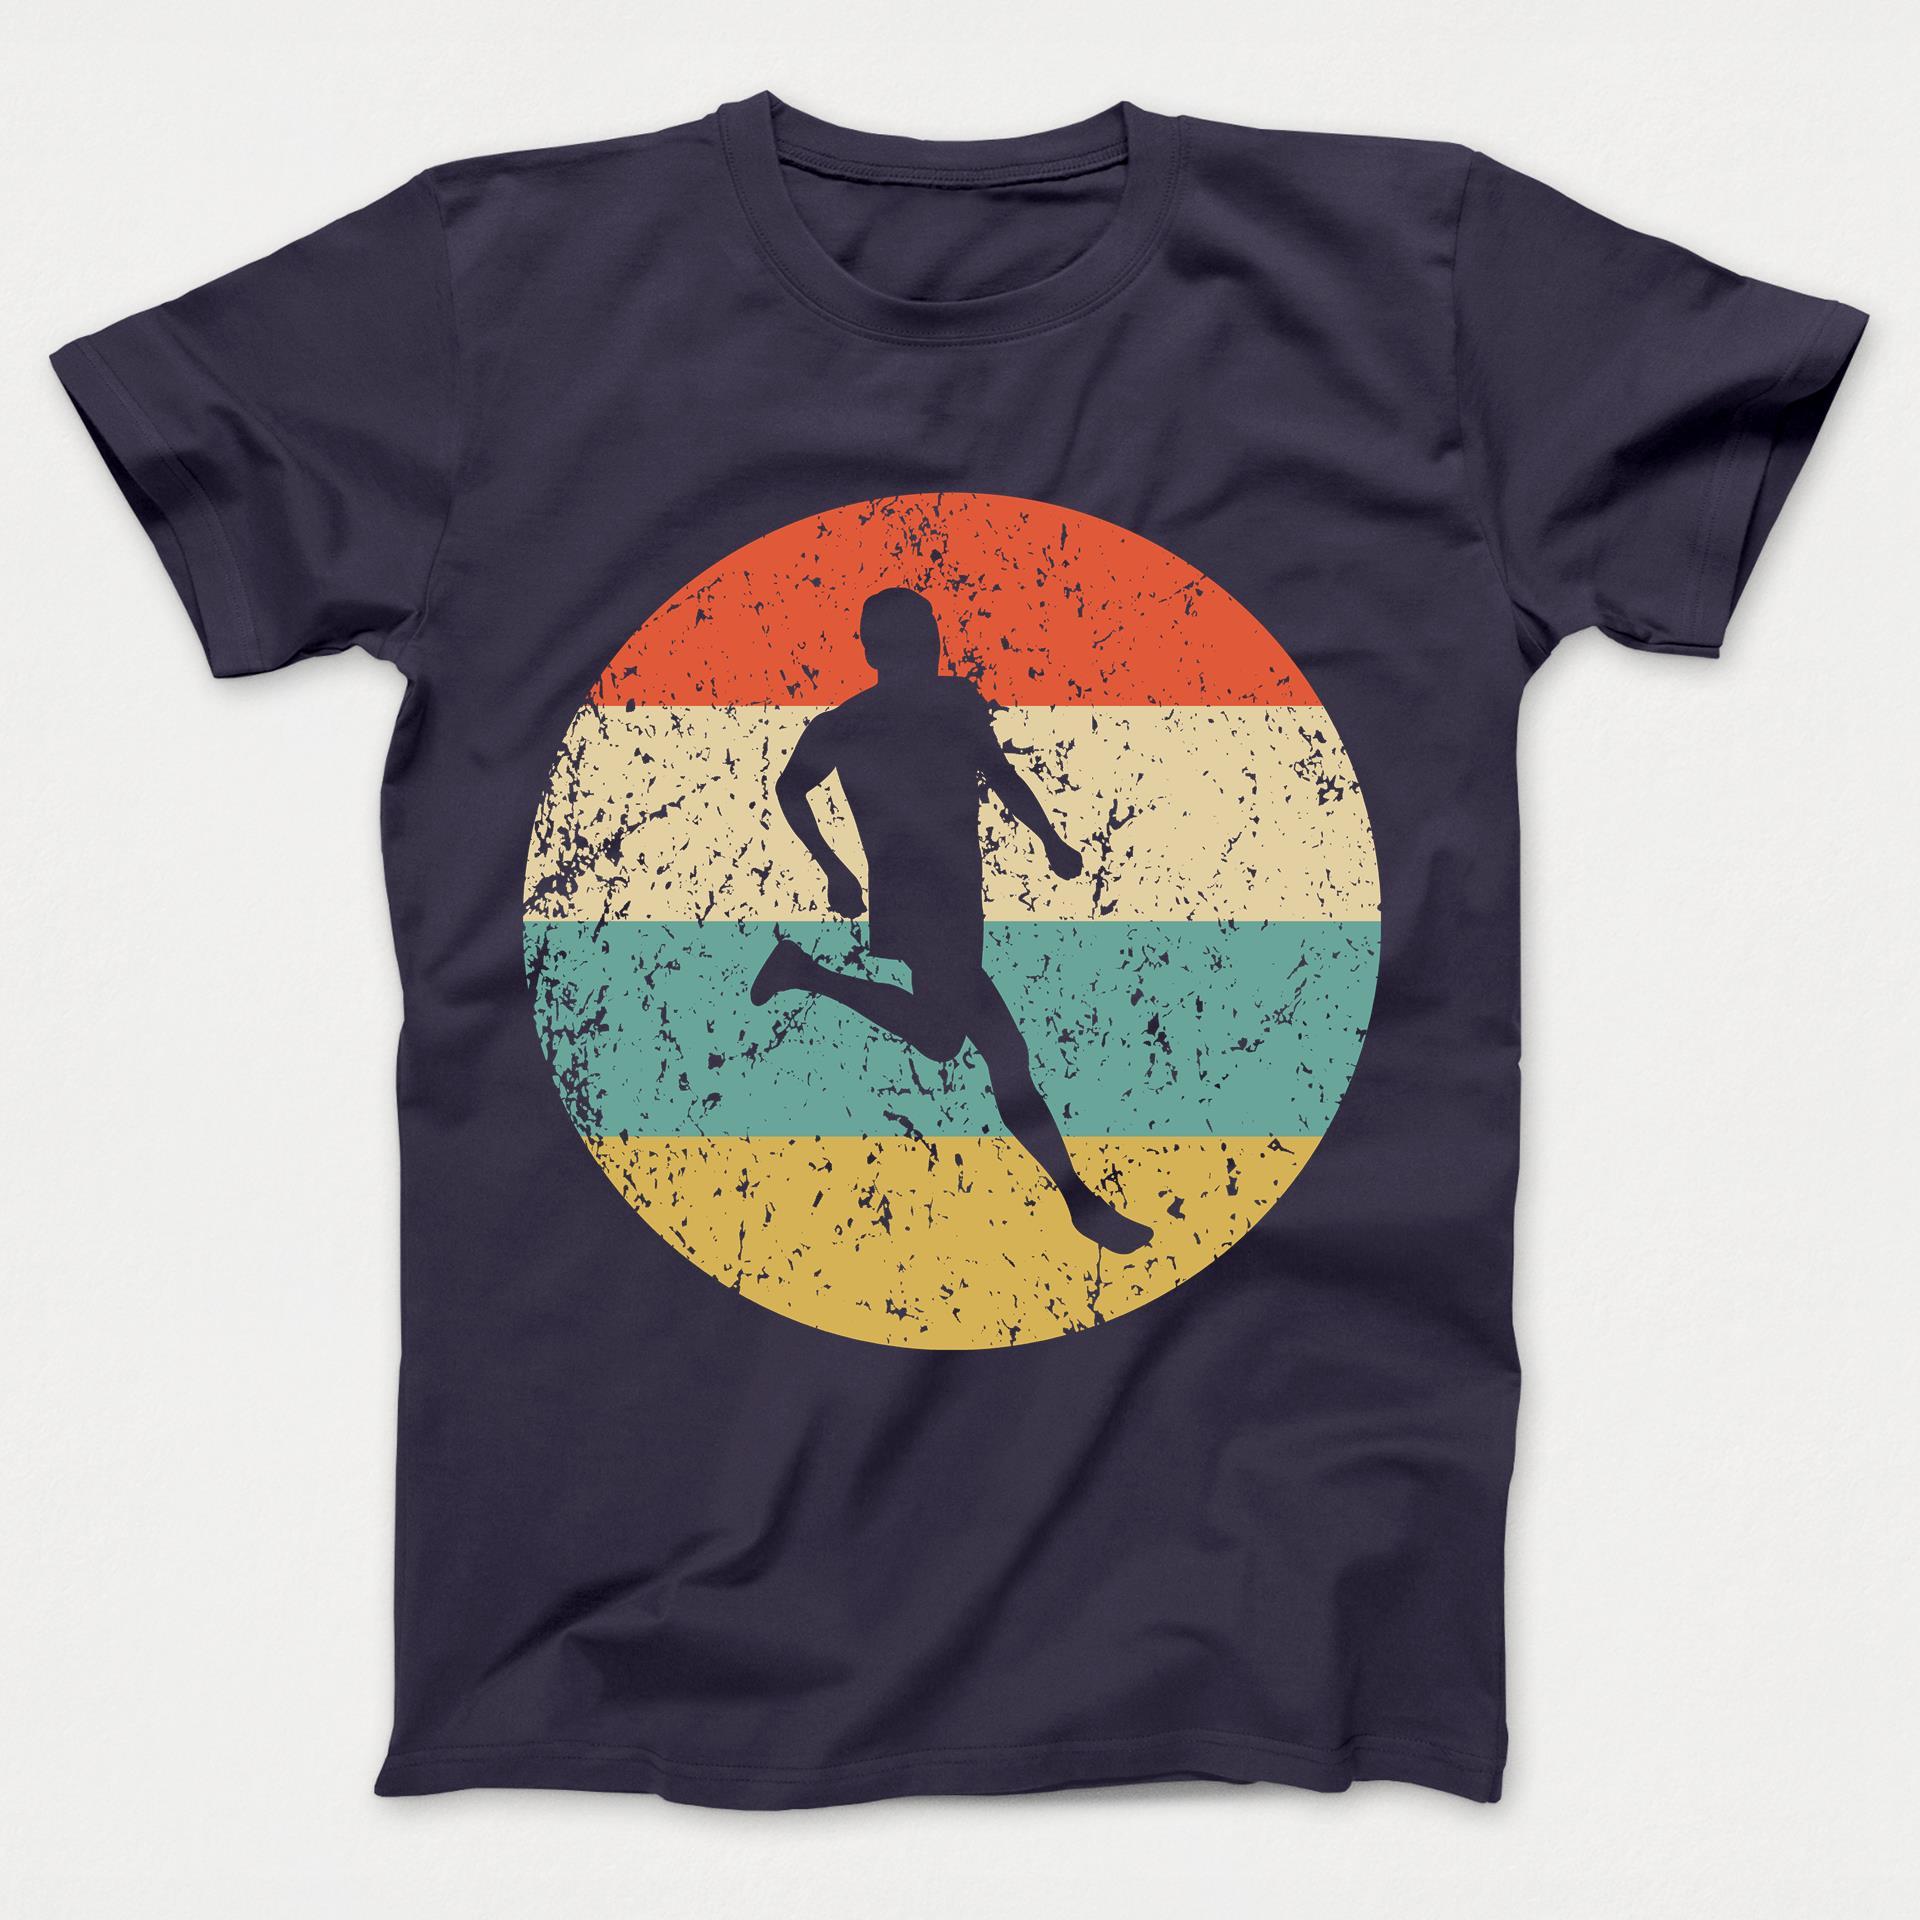 Running Shirt - Vintage Retro Runner Kids T-Shirt